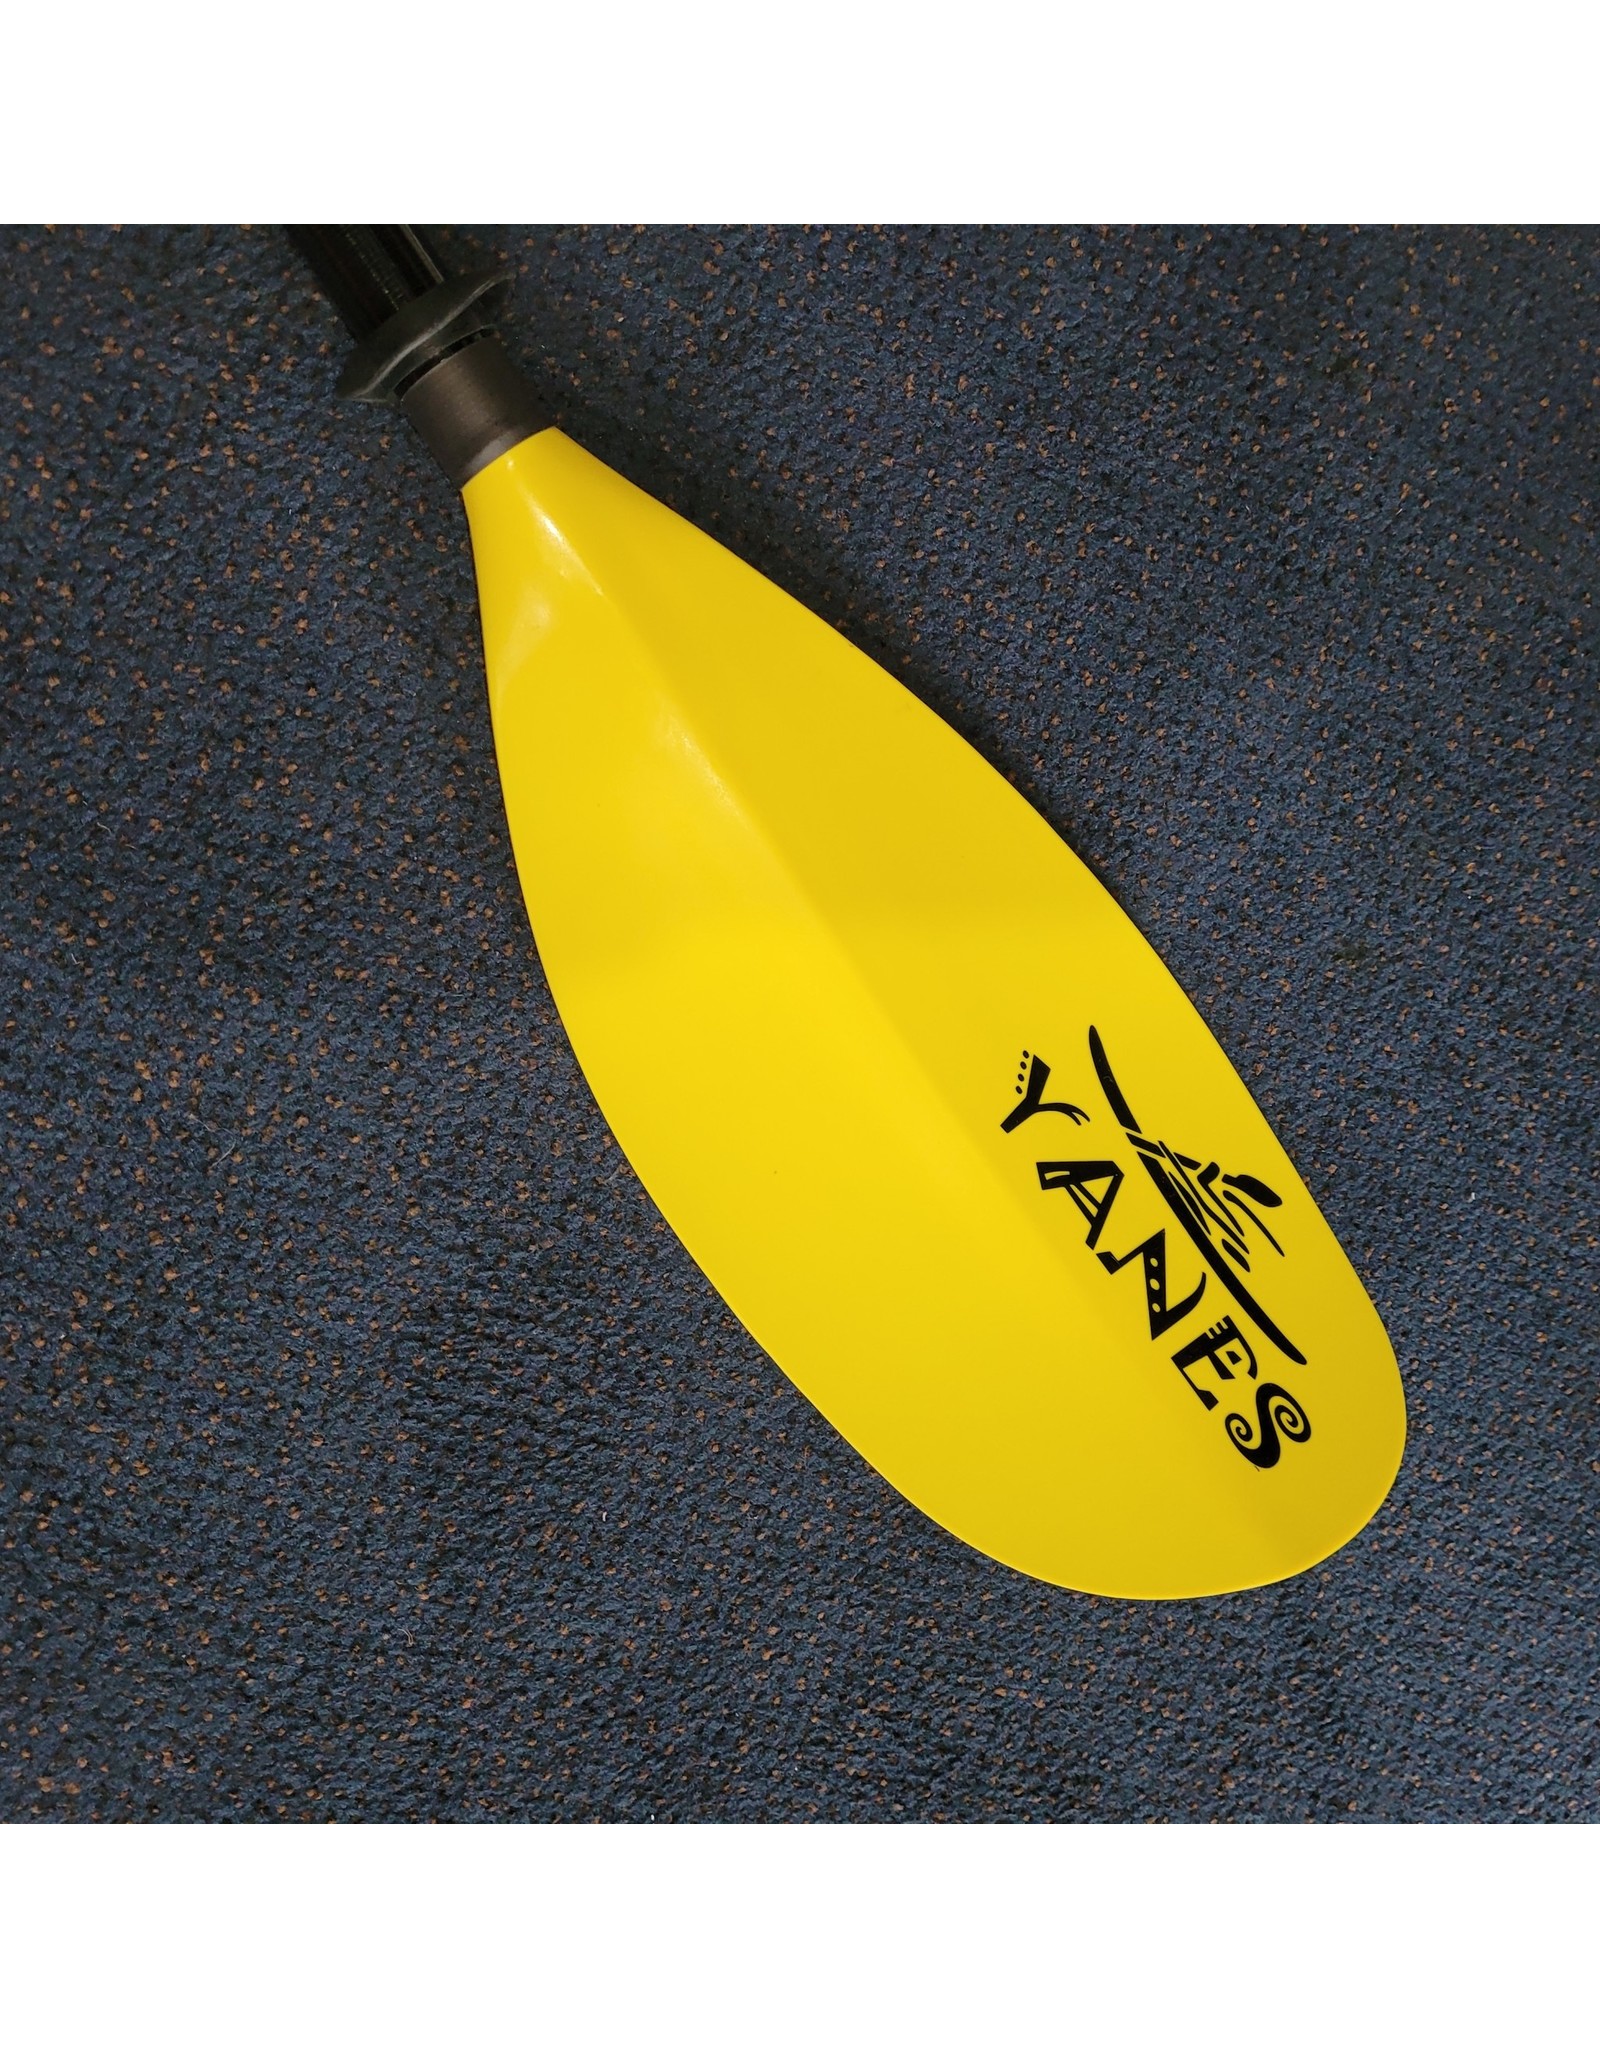 Yanes Yanes adjustable FB paddle 225-235 cm